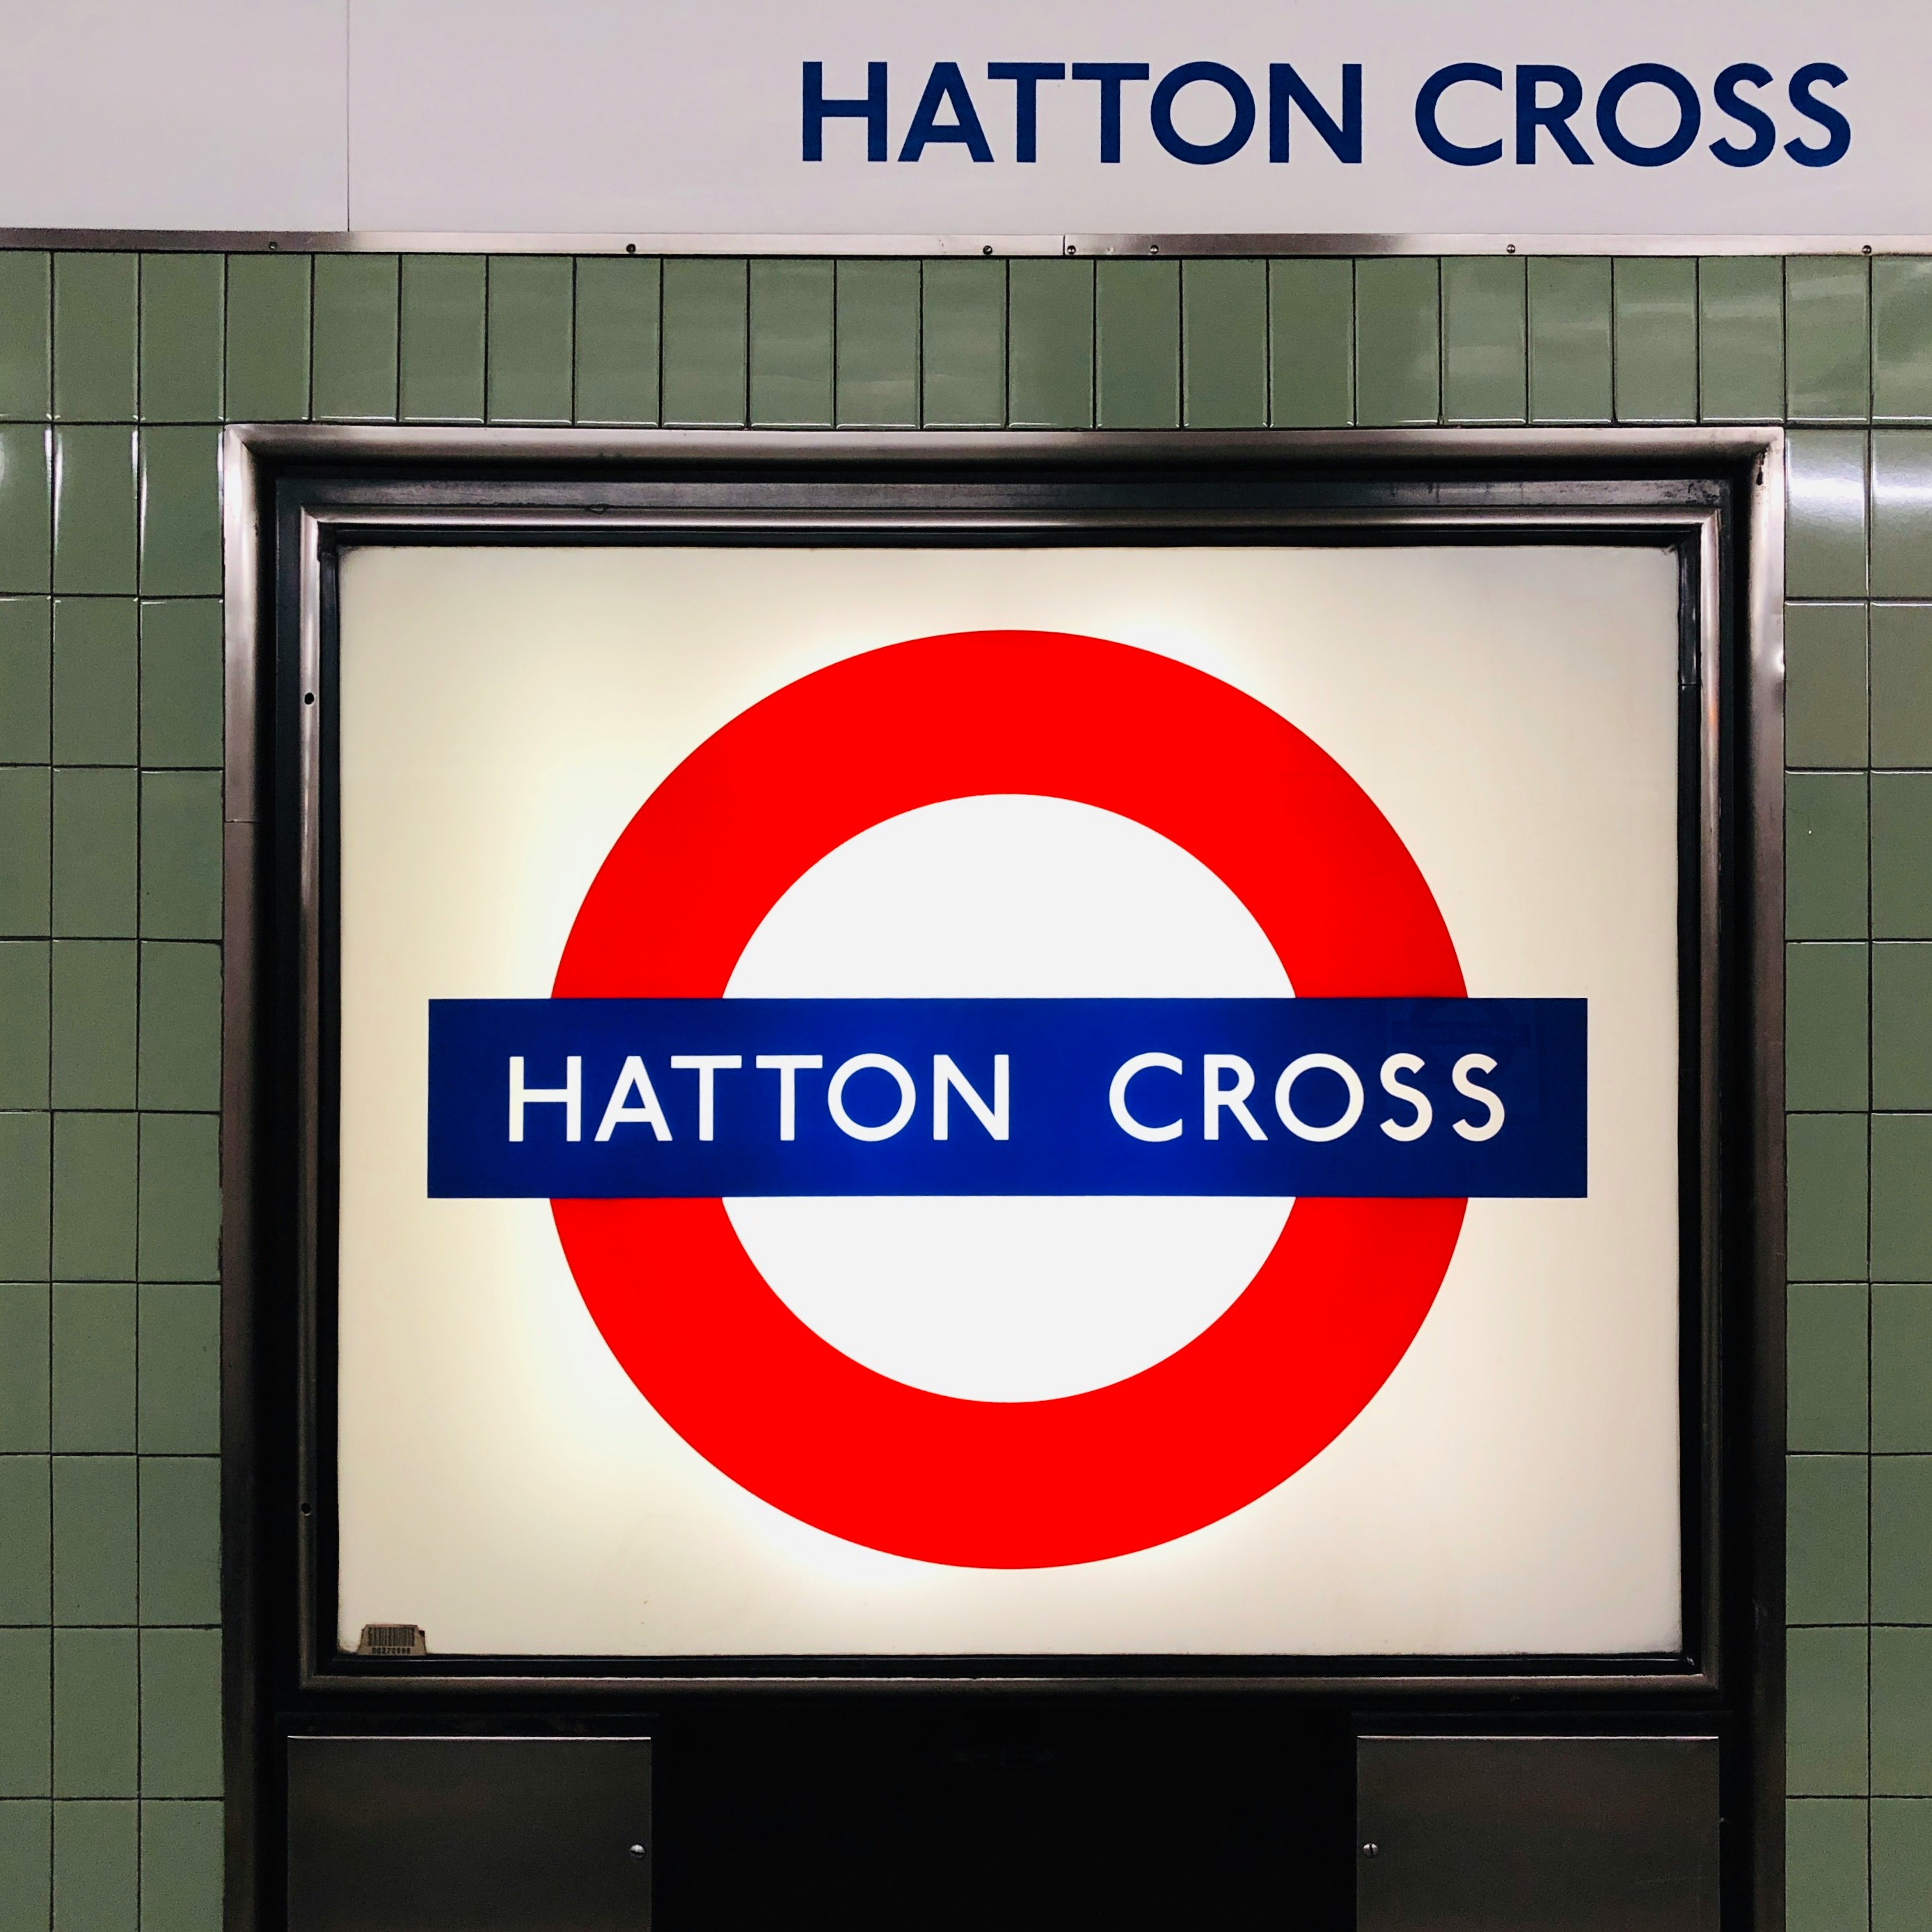 Hatton Cross signage